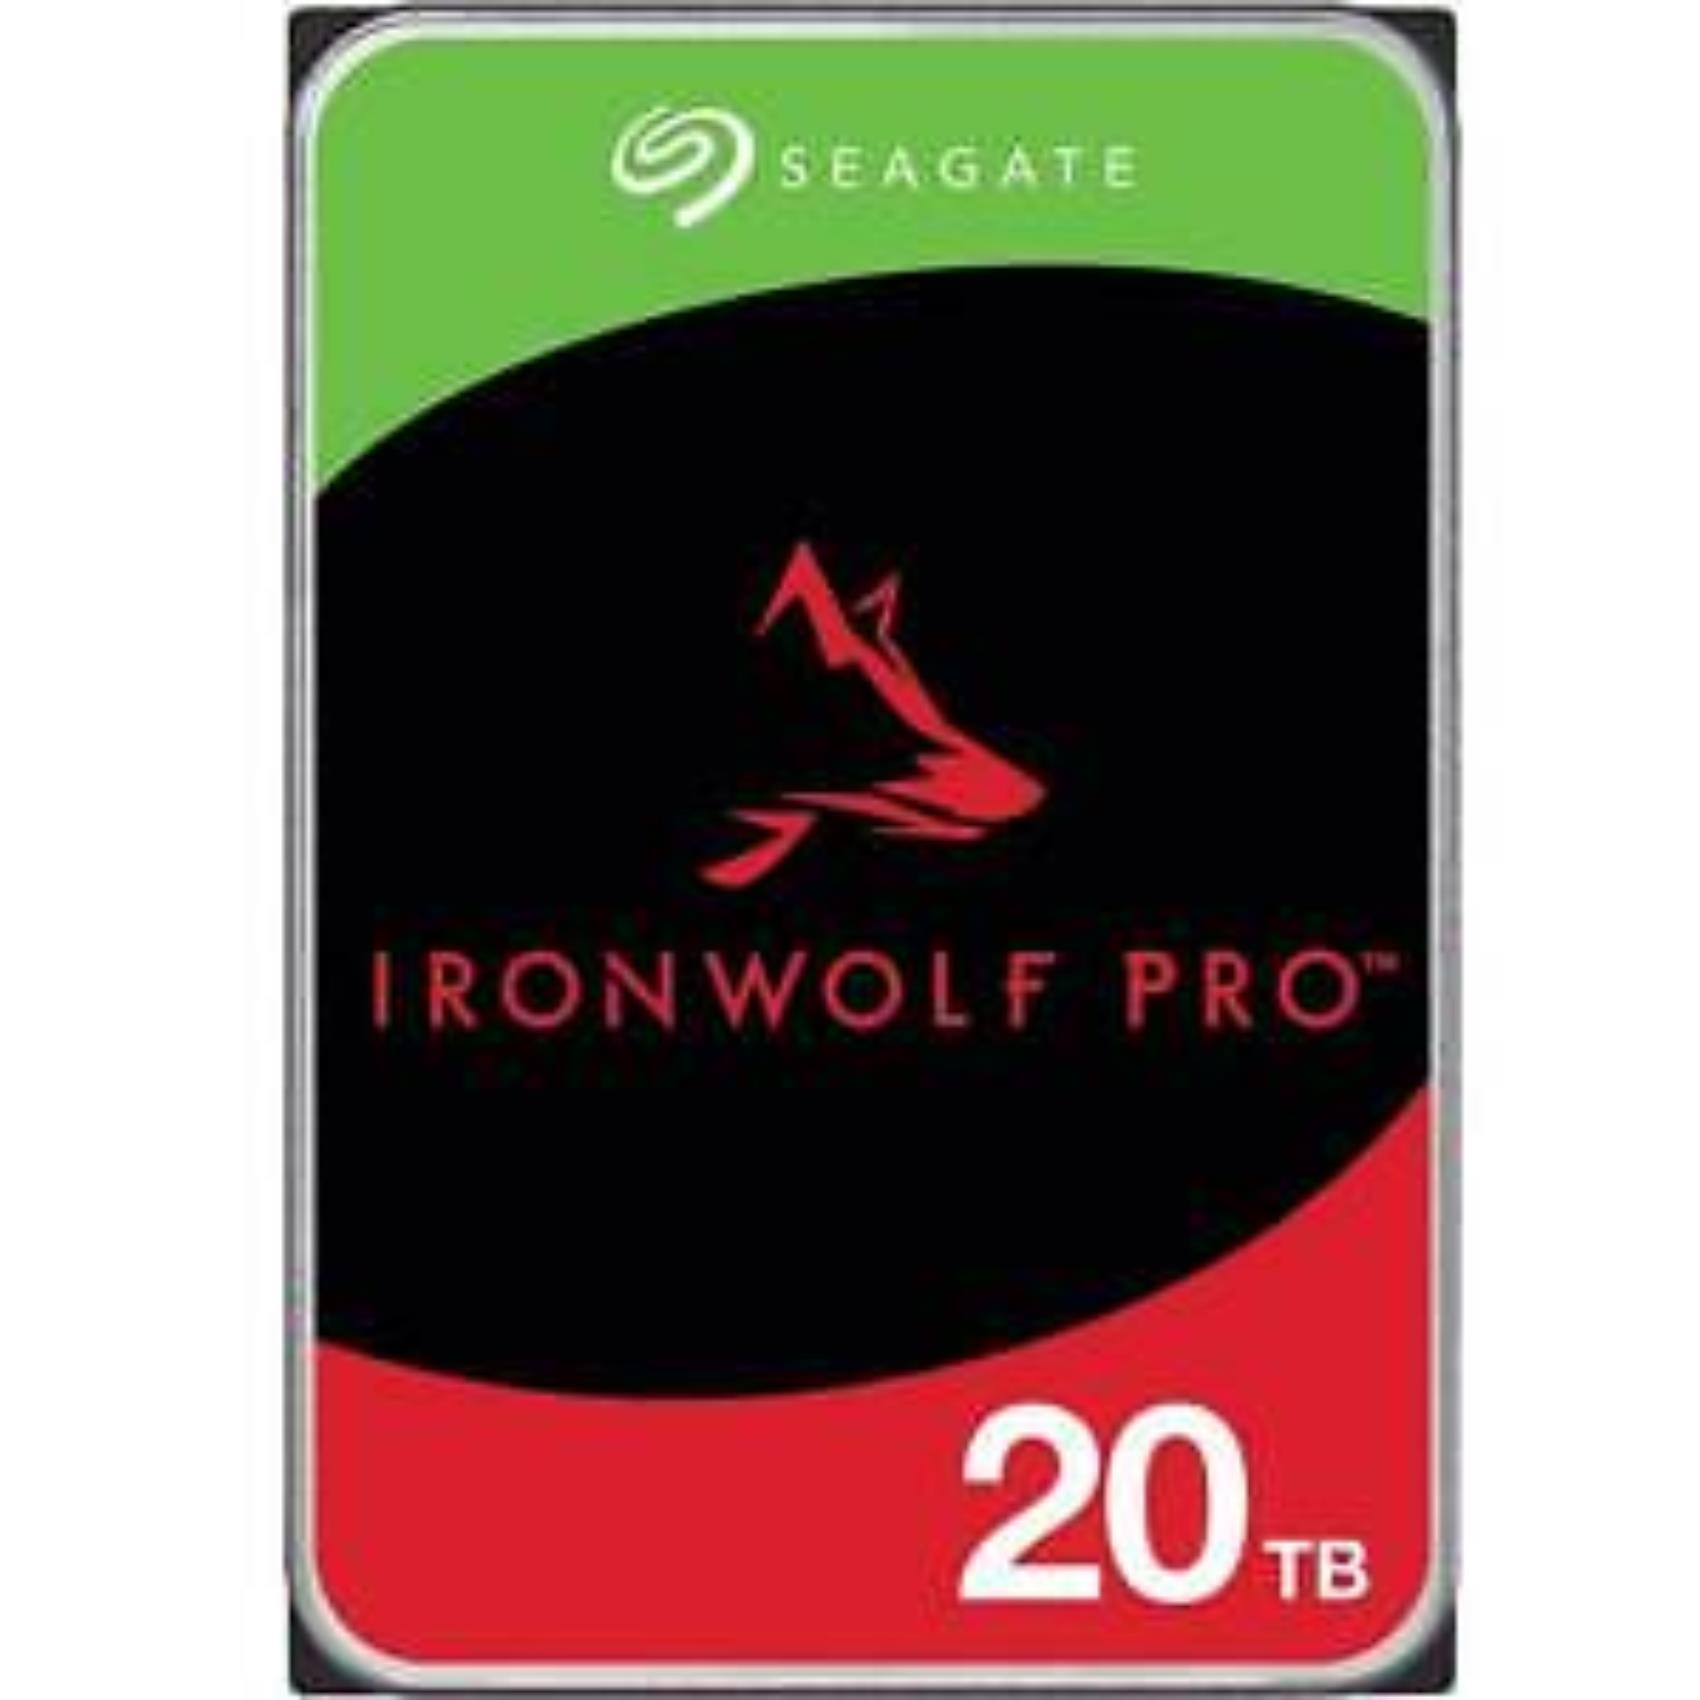 Ironwolf Pro 20tb Sata3 3 5 7200rpm Seagate St20000ne000